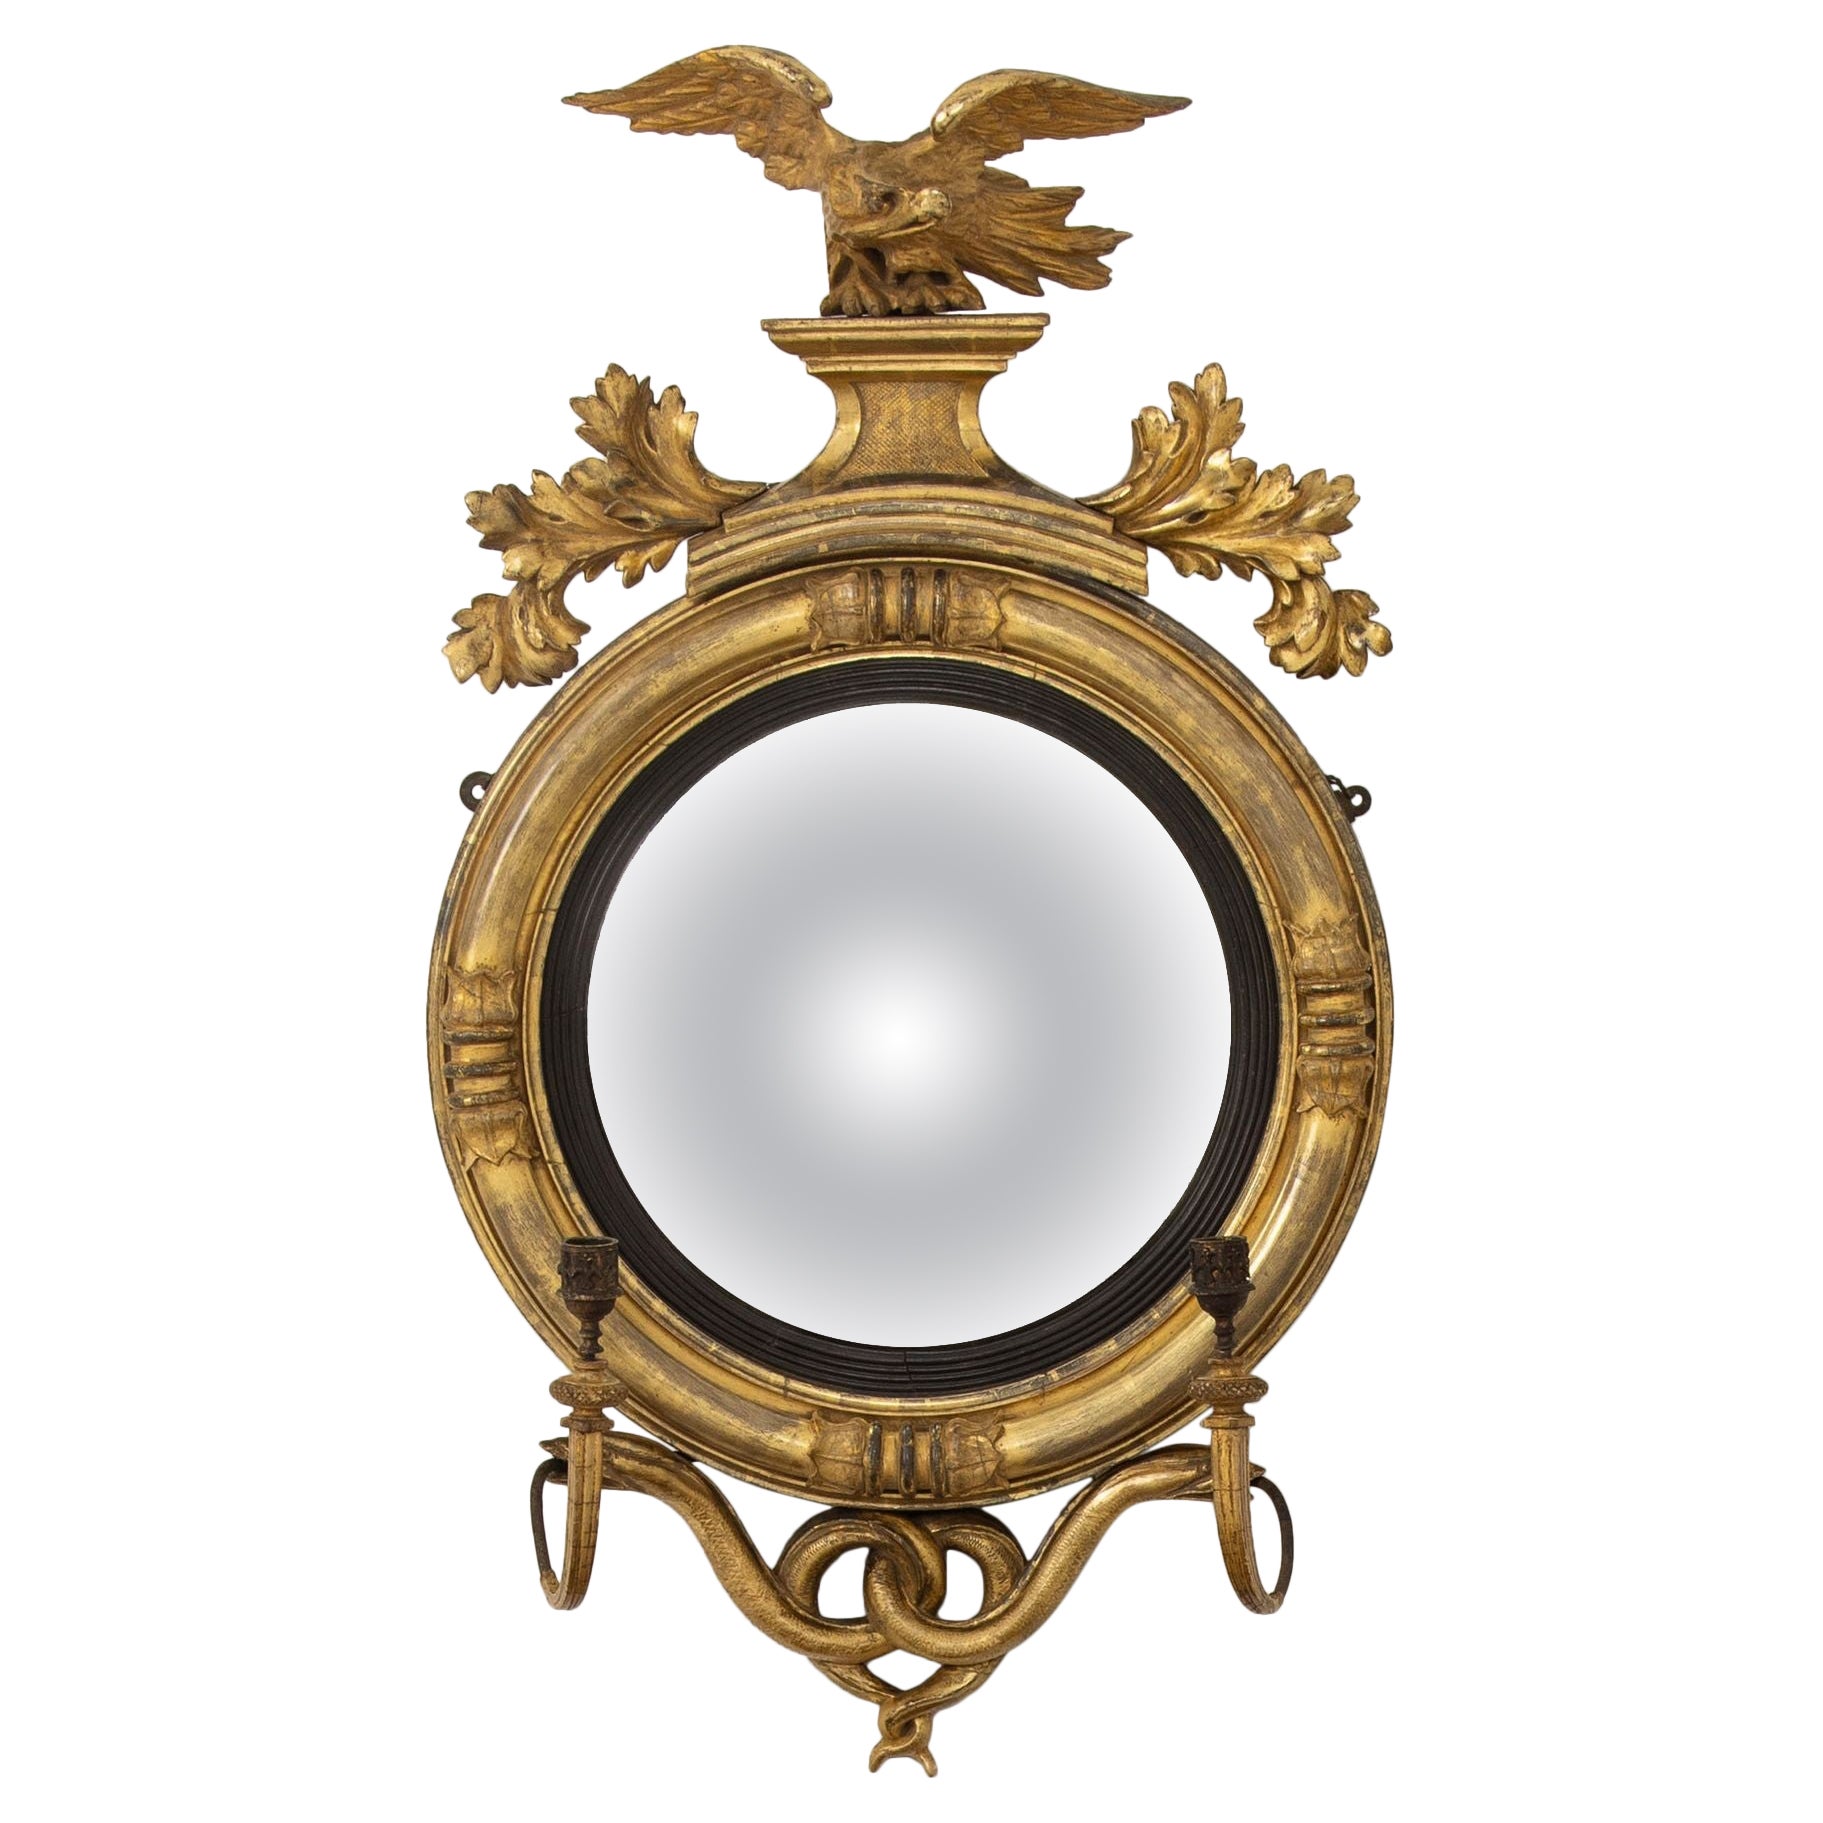 19th c. English Regency Convex Mirror in Original Giltwood